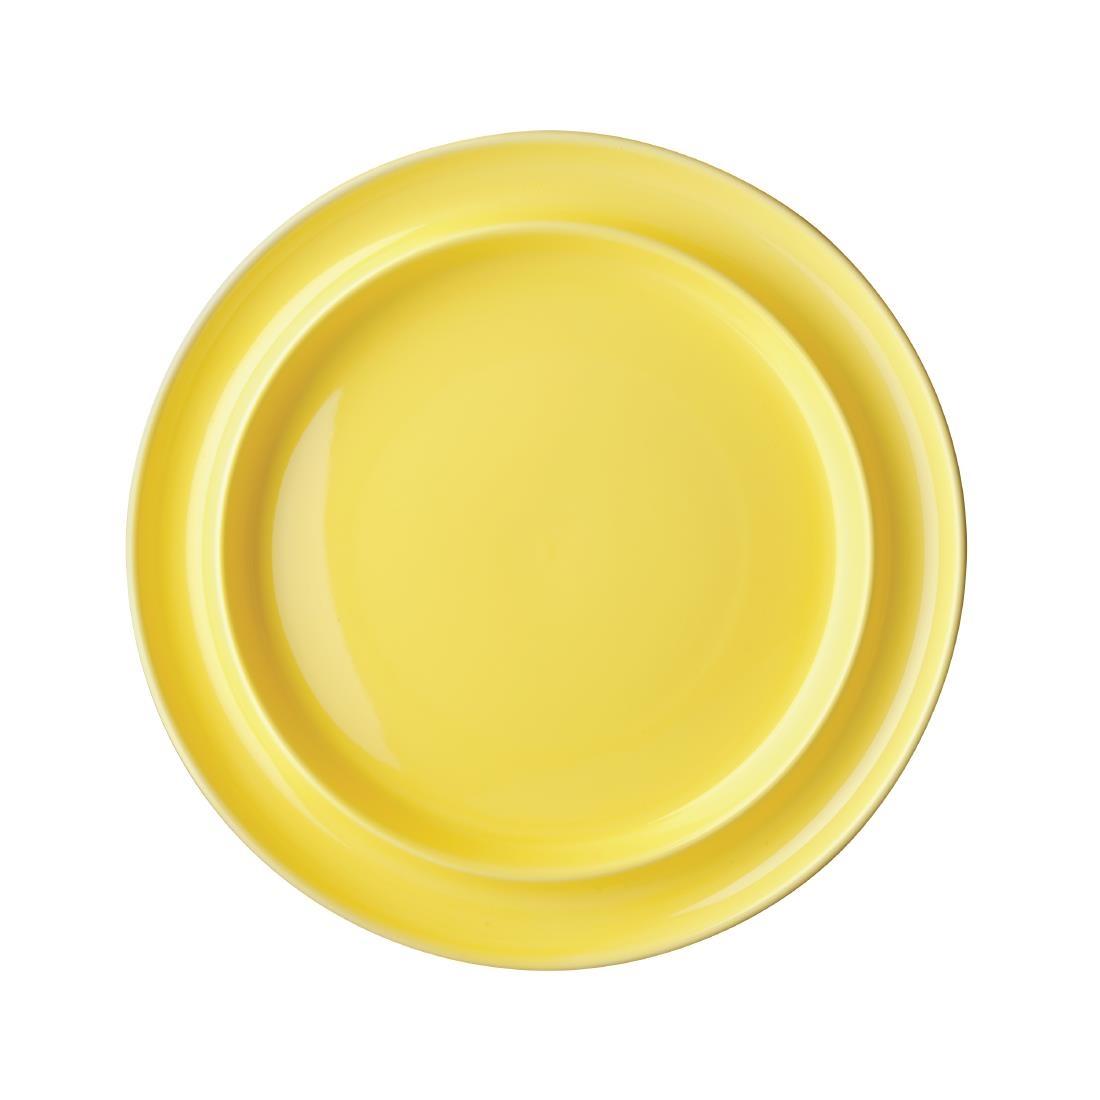 Olympia Kristallon Heritage Raised Rim Plates Yellow 252mm (Pack of 4) - DW707  - 1